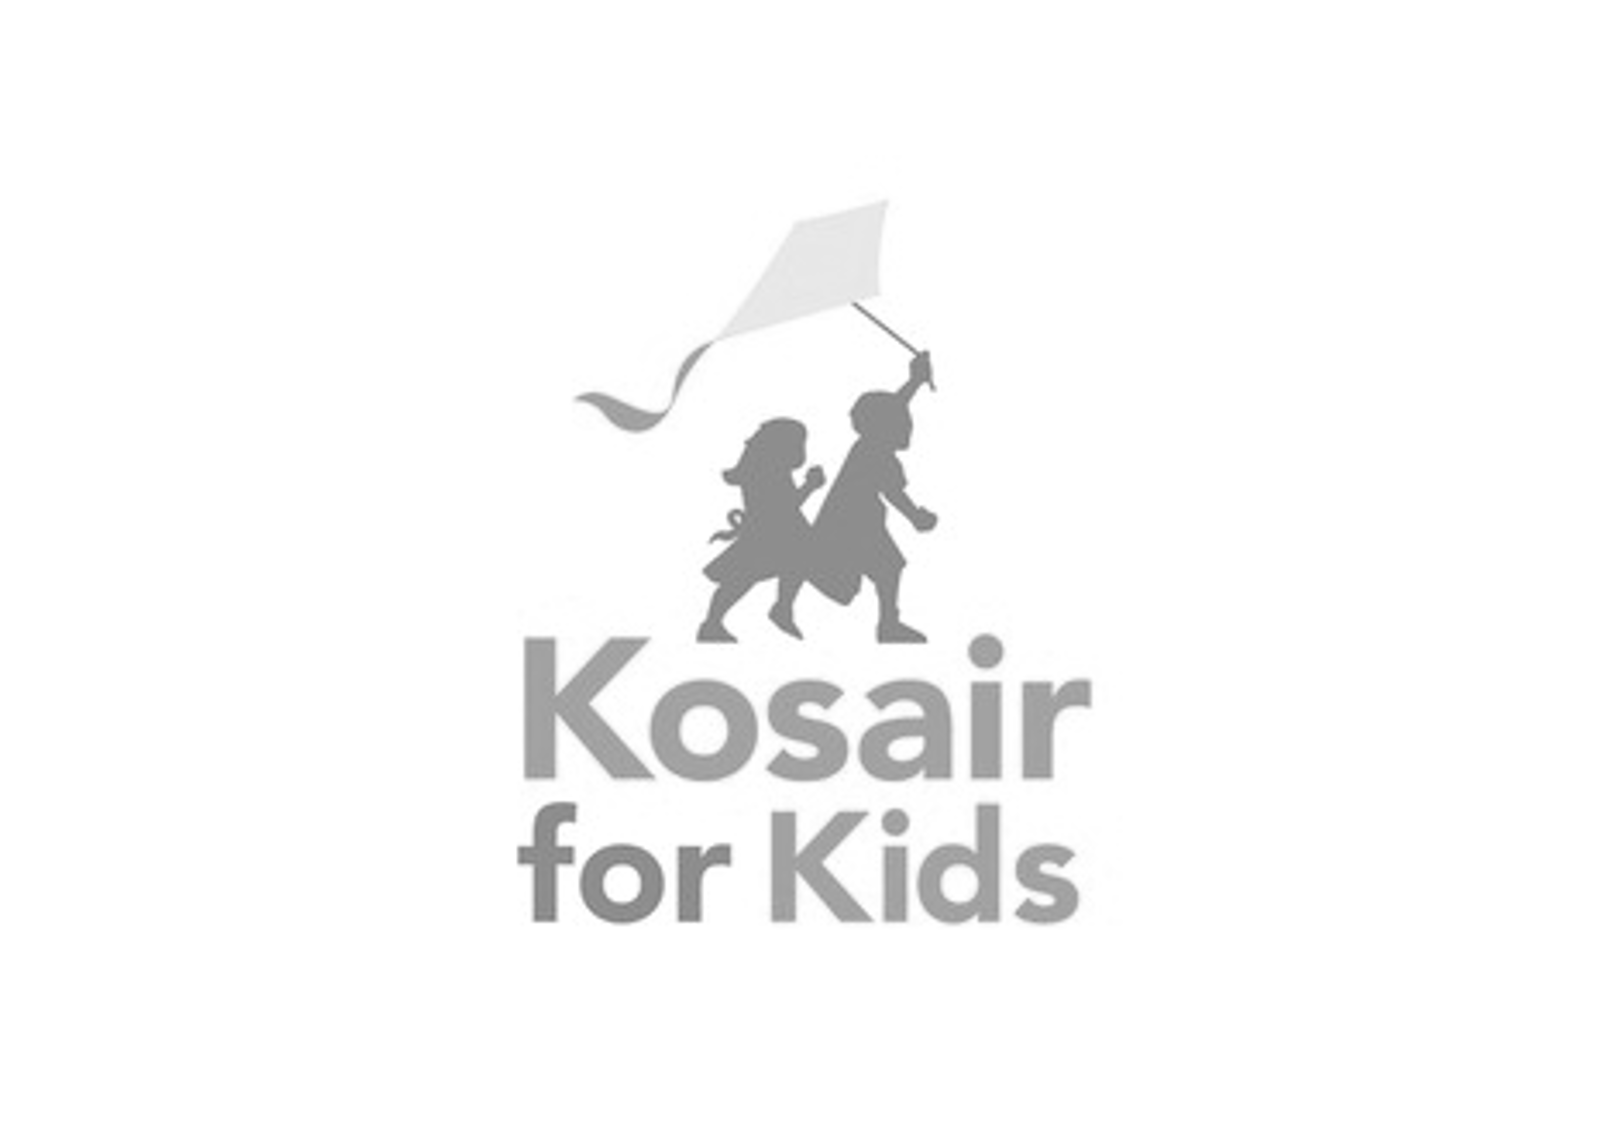 Kosair for Kids Grey.png